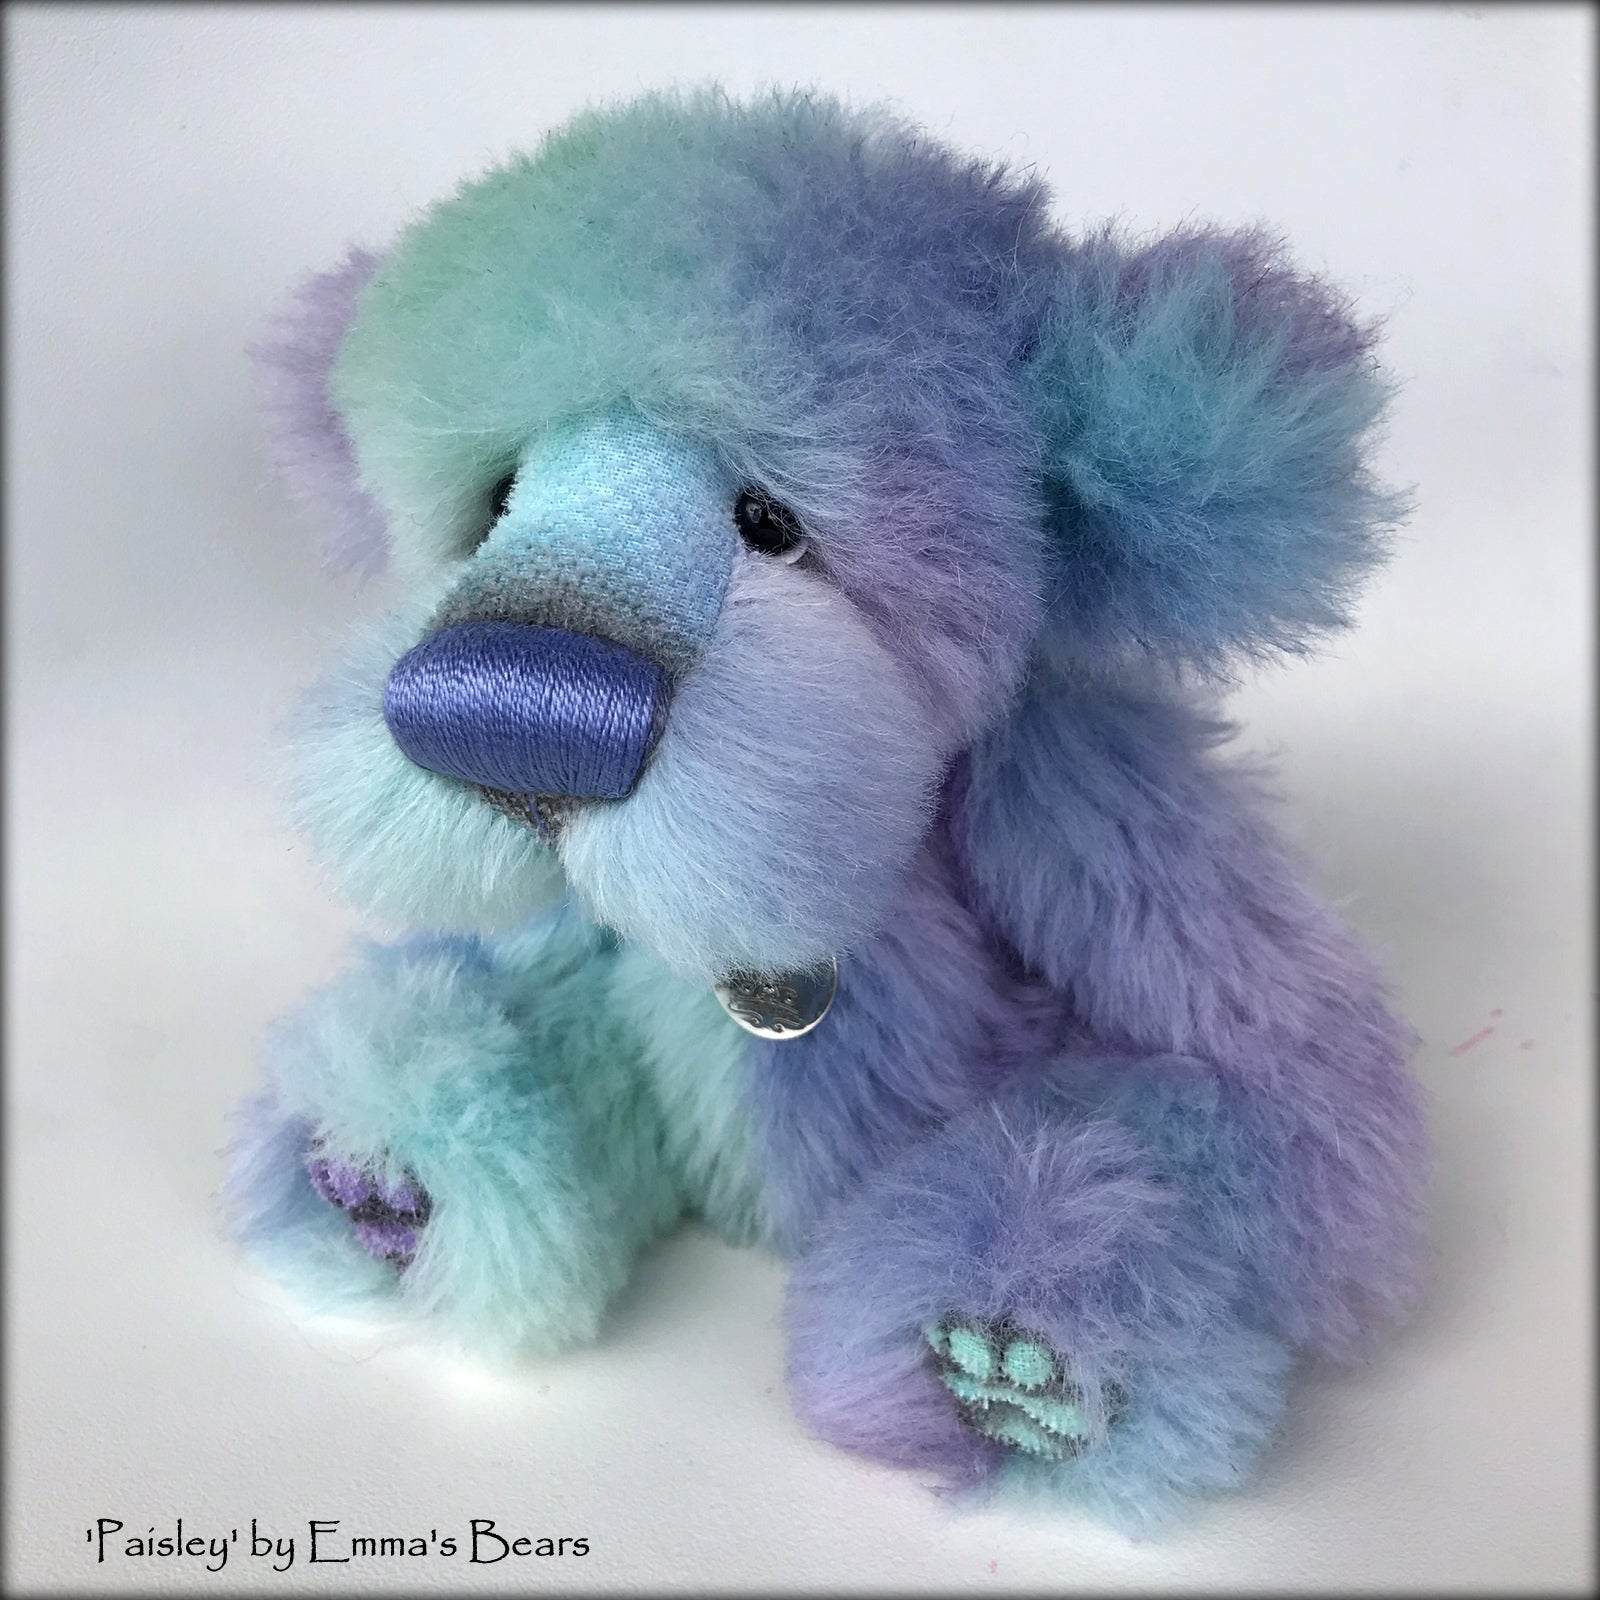 Paisley - 20 Years of Emma's Bears Commemorative Teddy - OOAK in a series